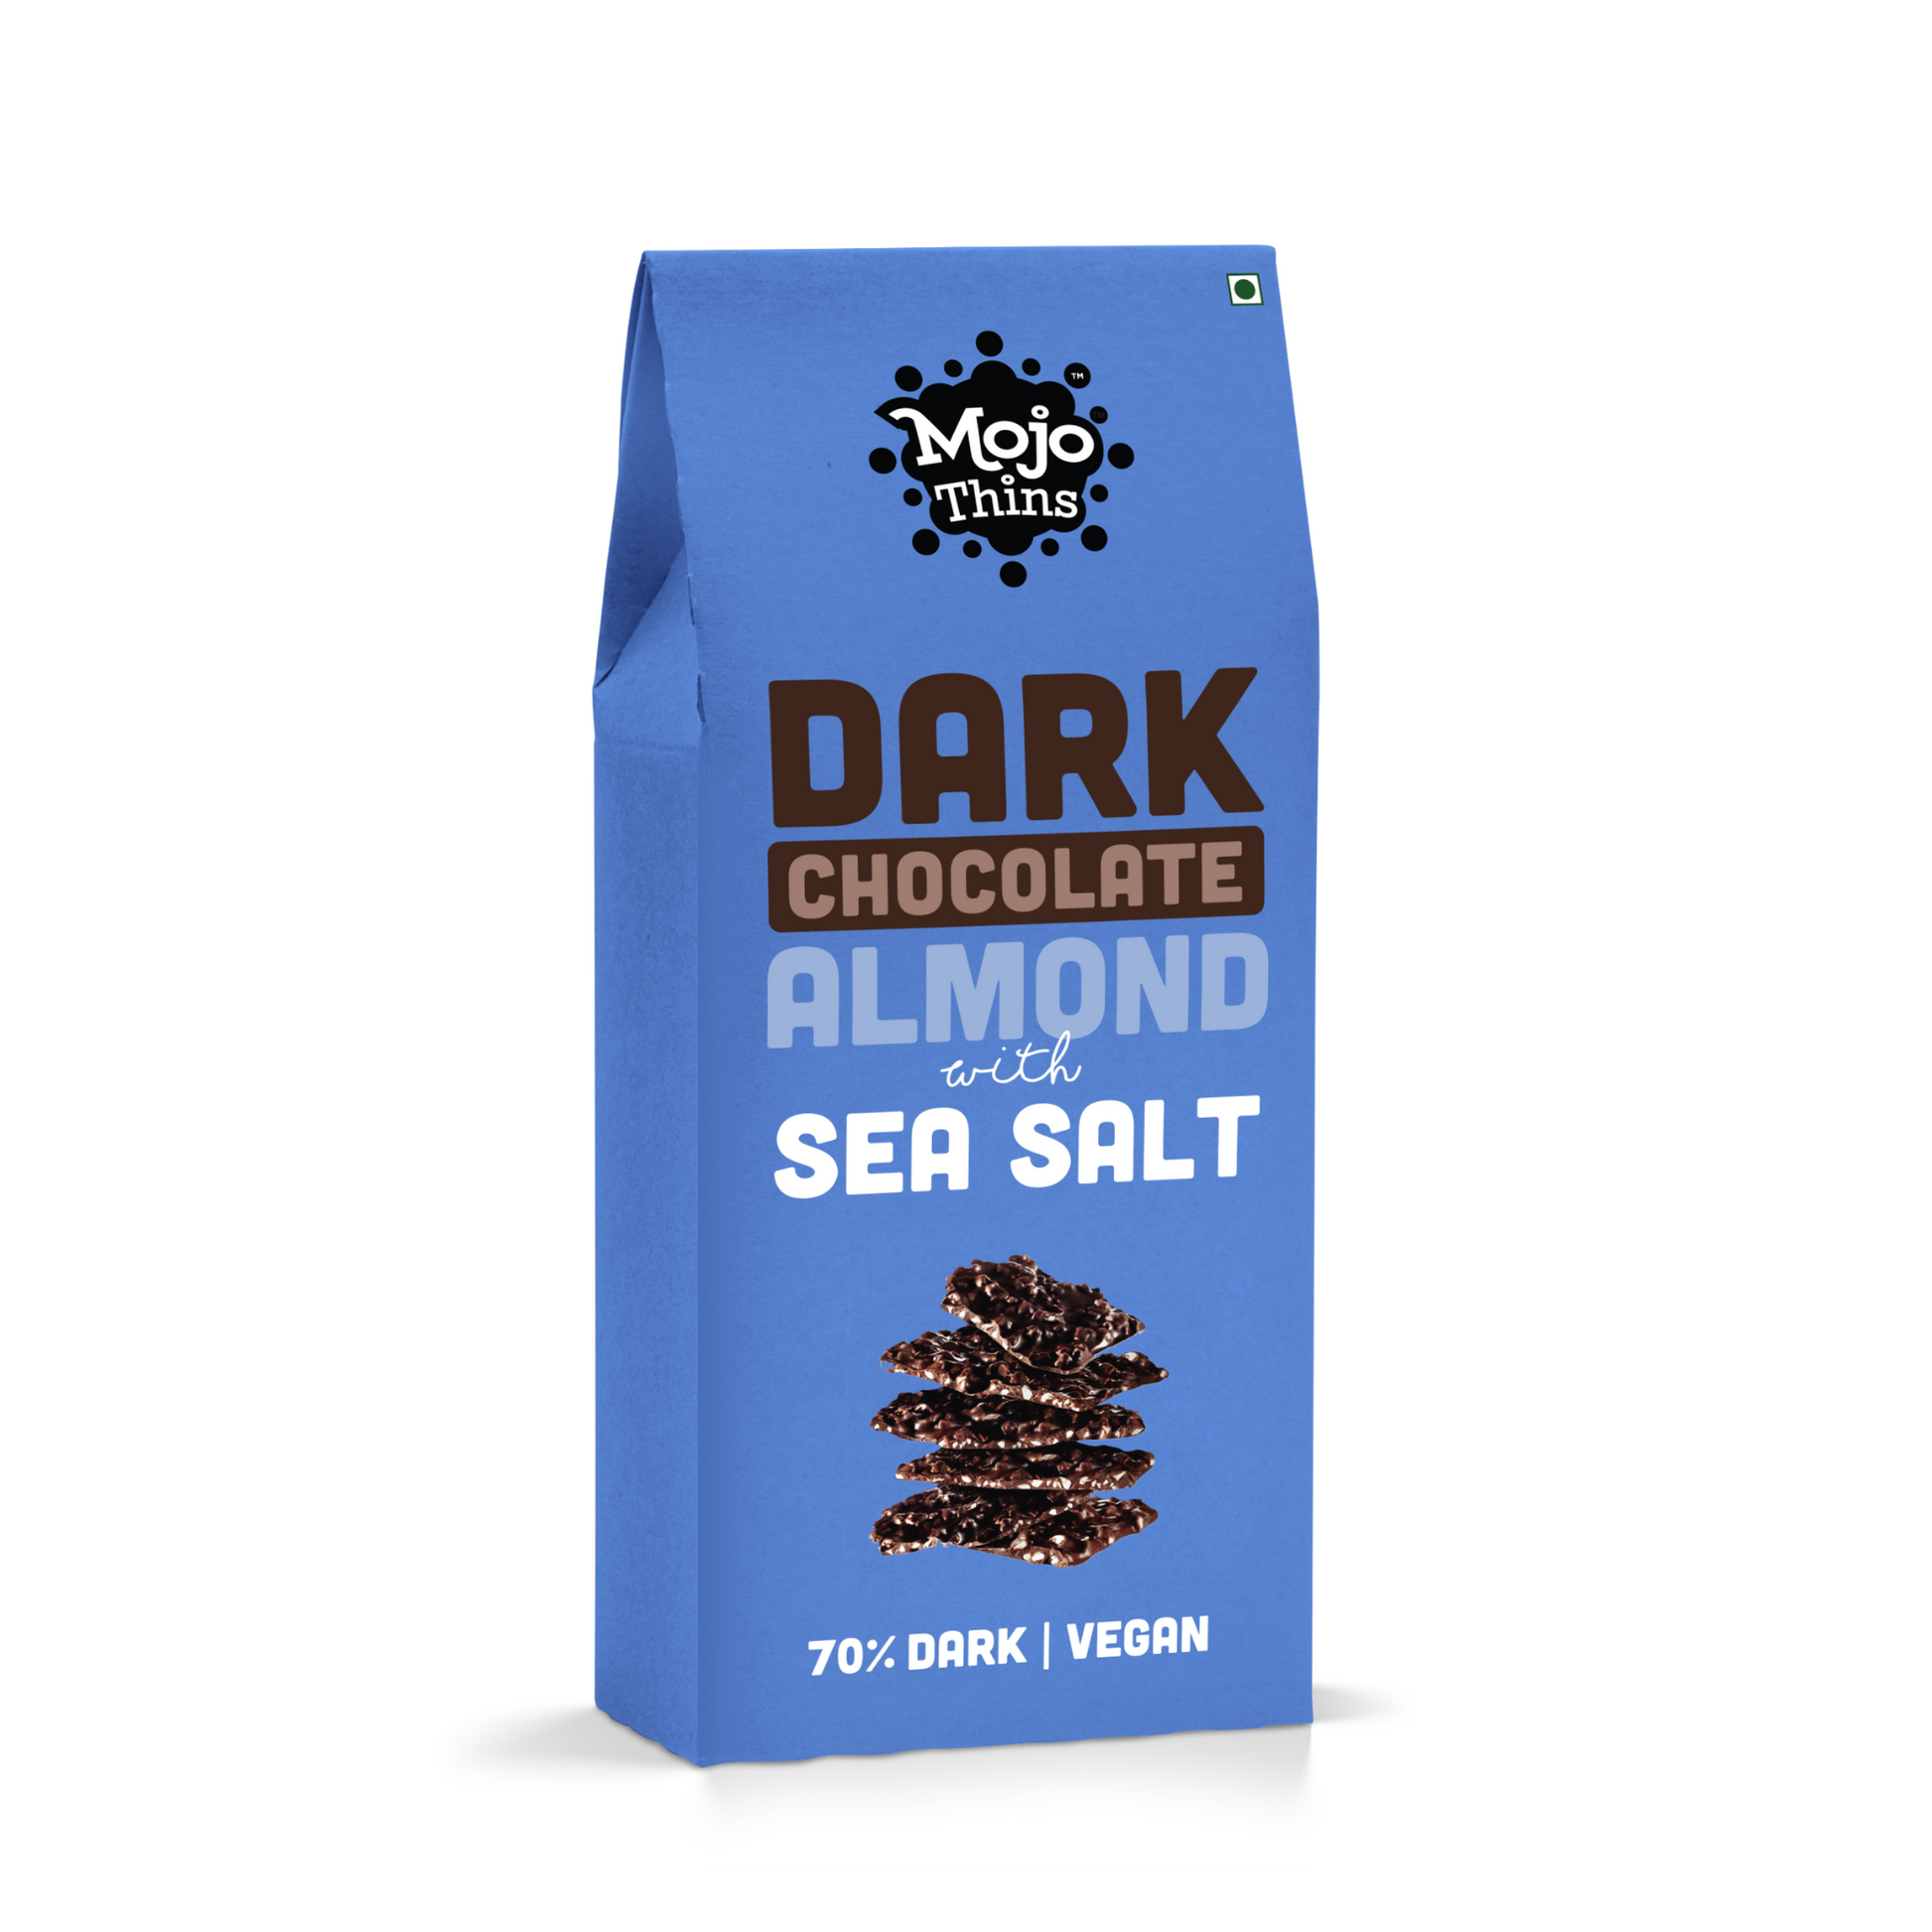 70% Dark Chocolate Almond with Sea Salt, 108g - Mojo Snacks